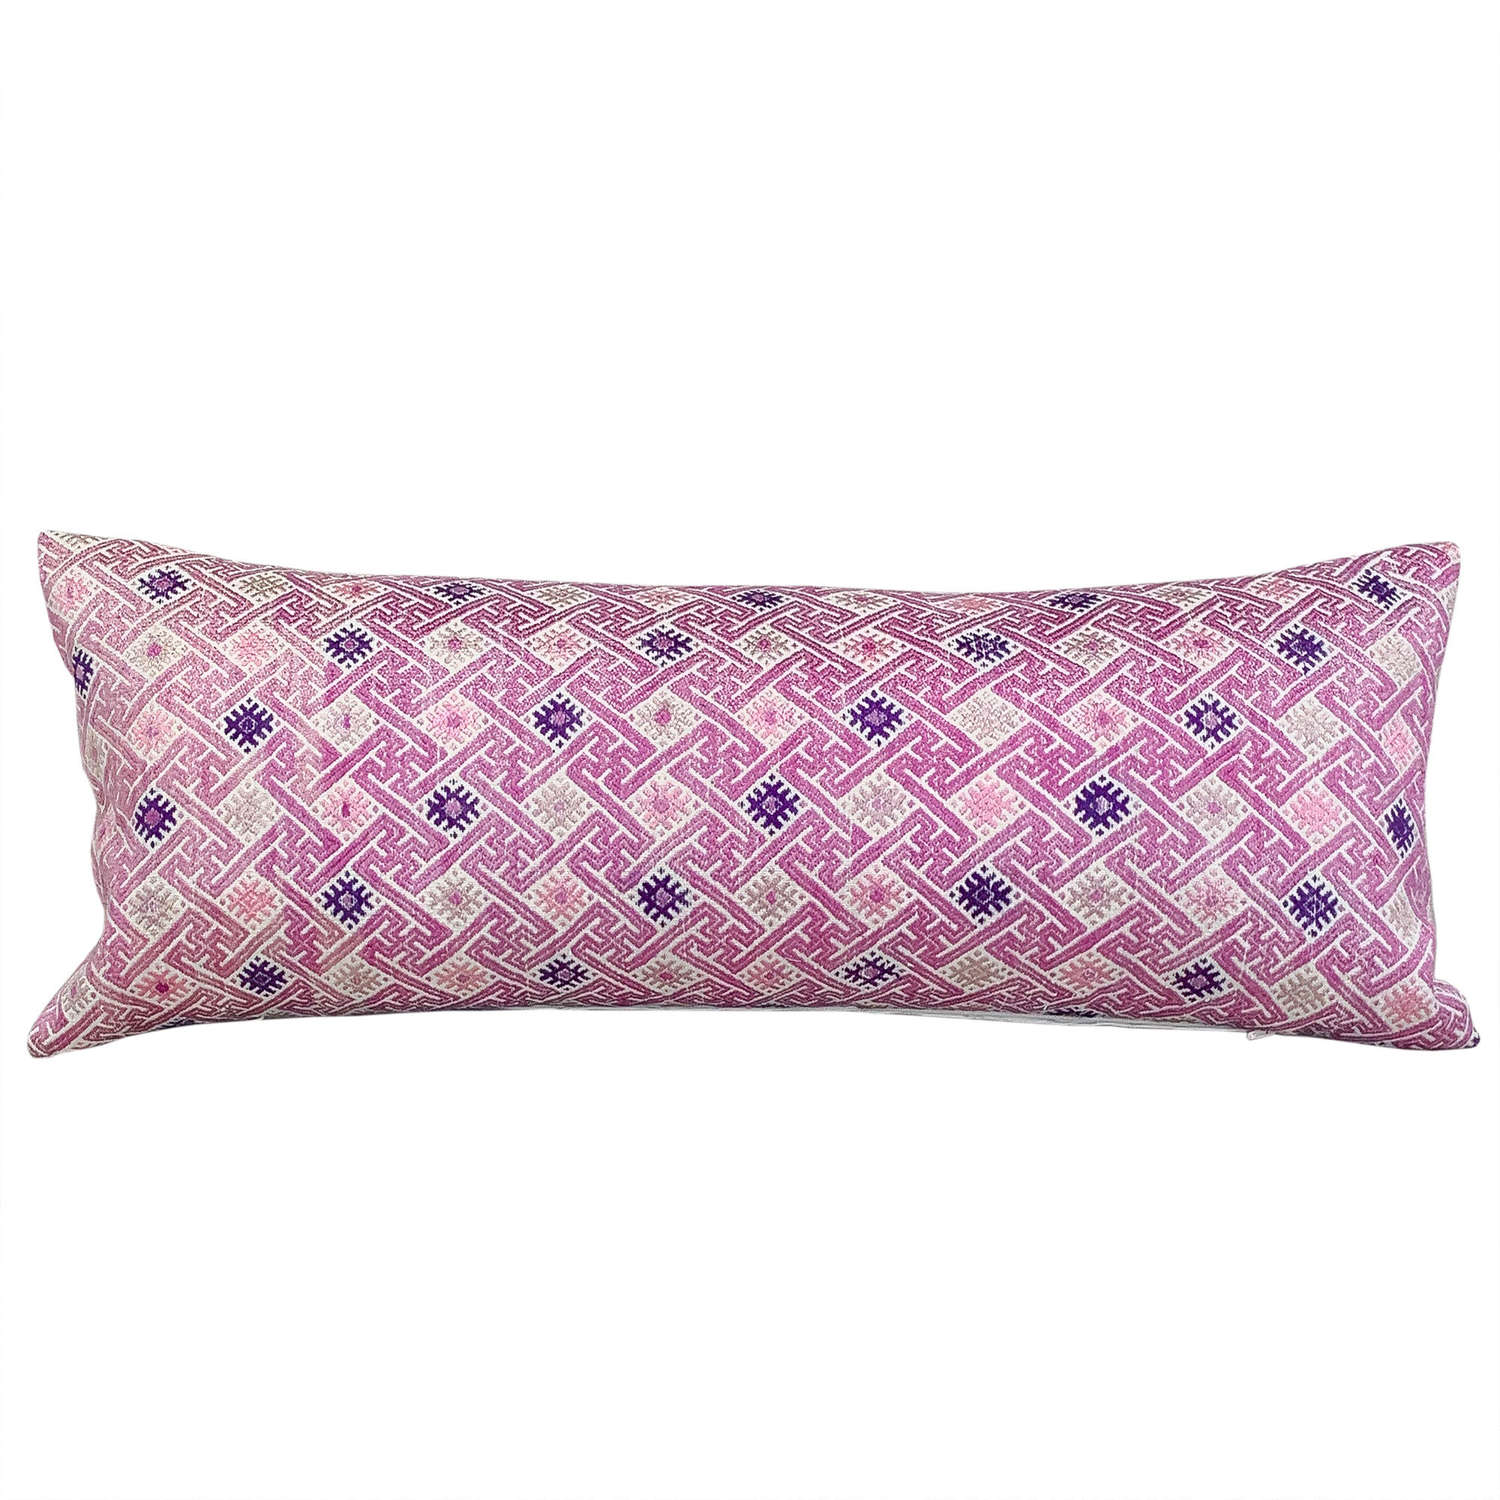 Pink wedding blanket cushion